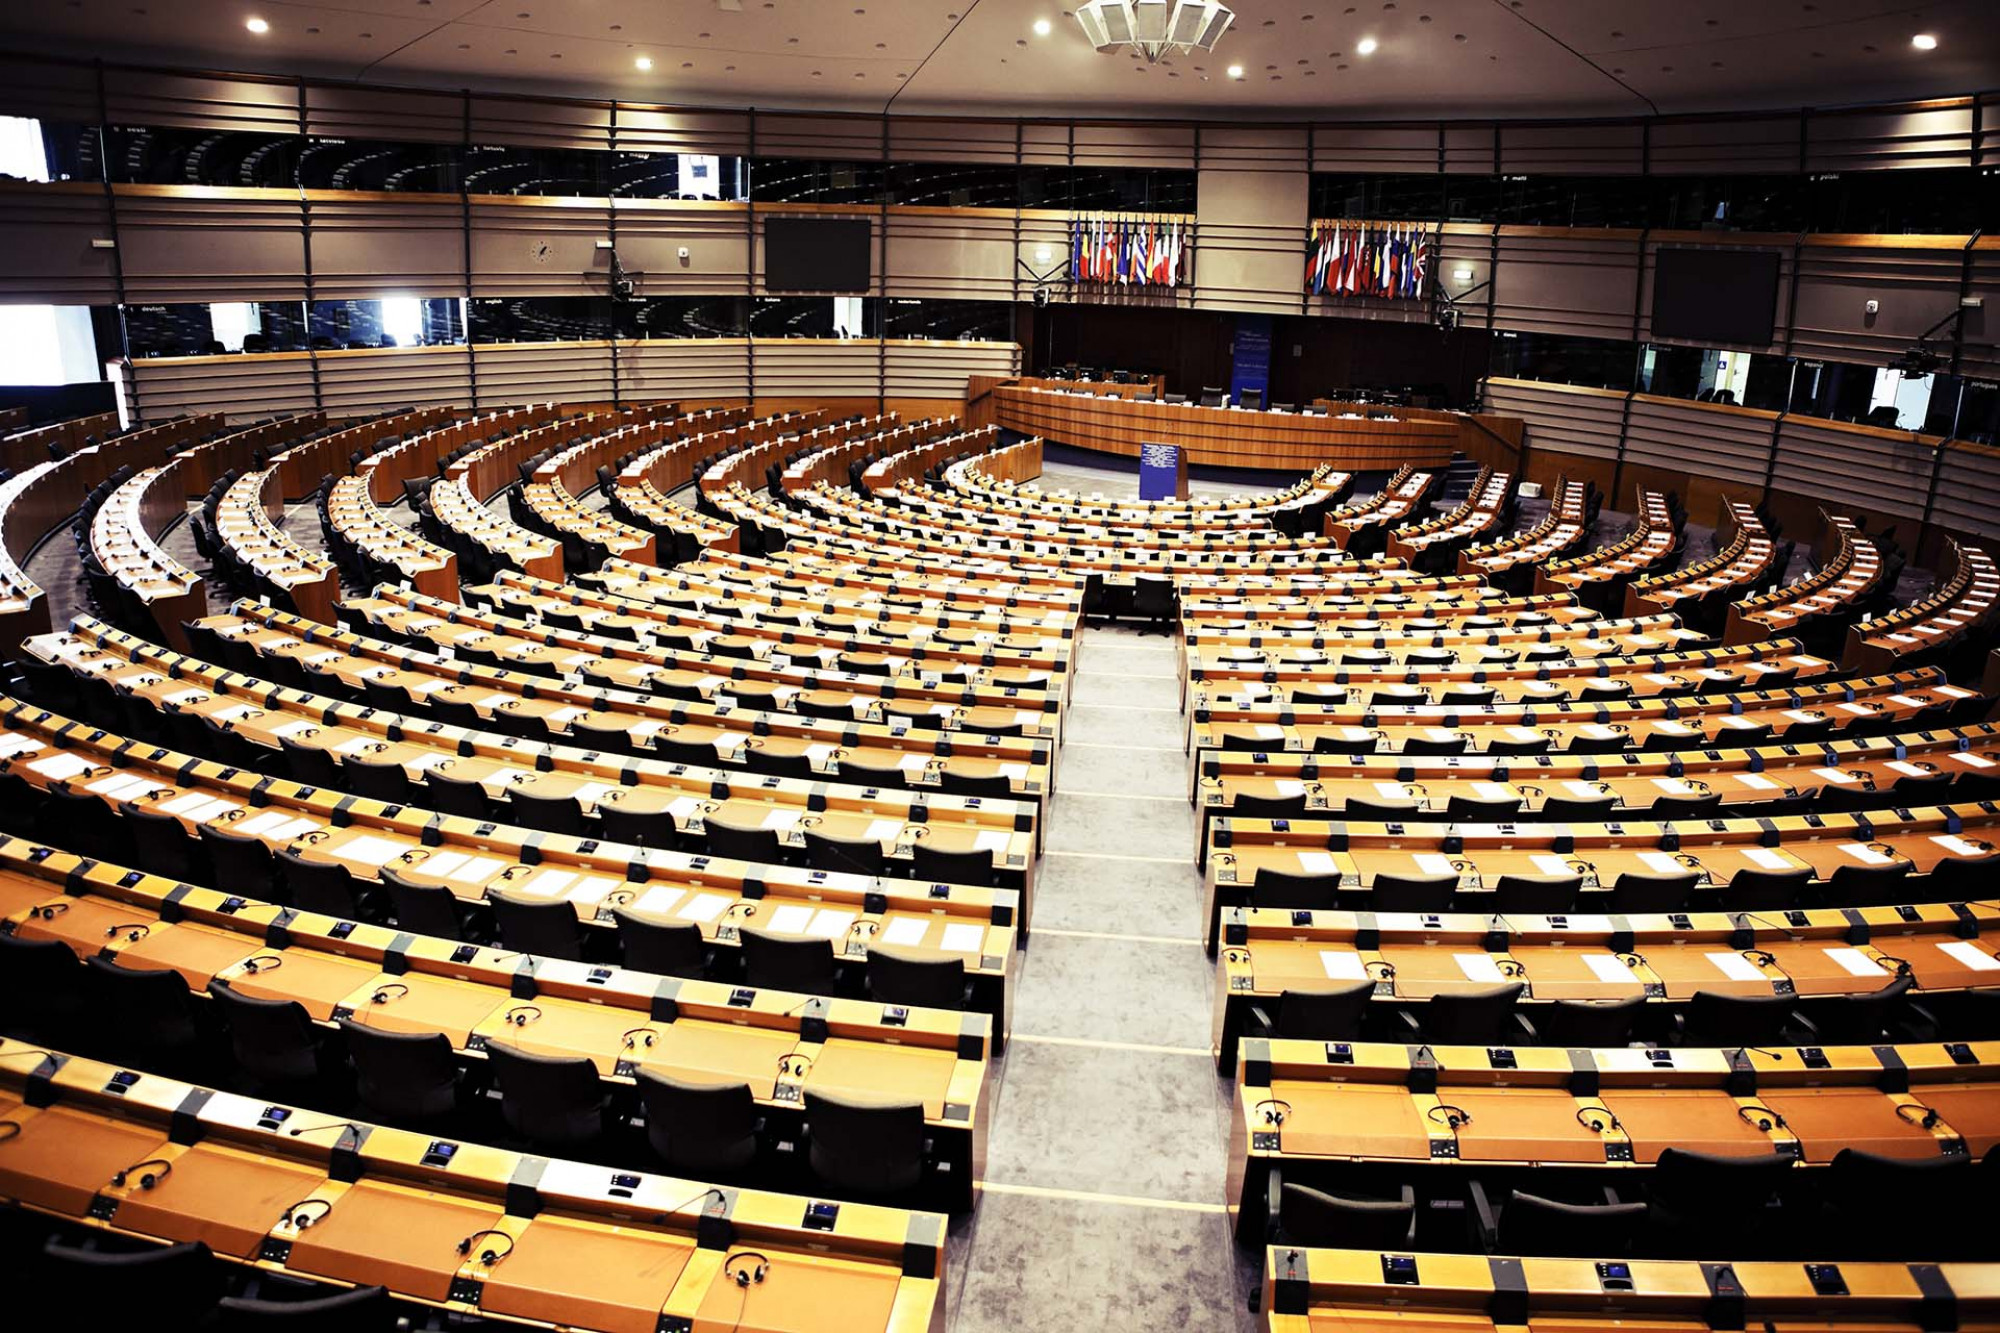 Round seating arrangement of the European parliament